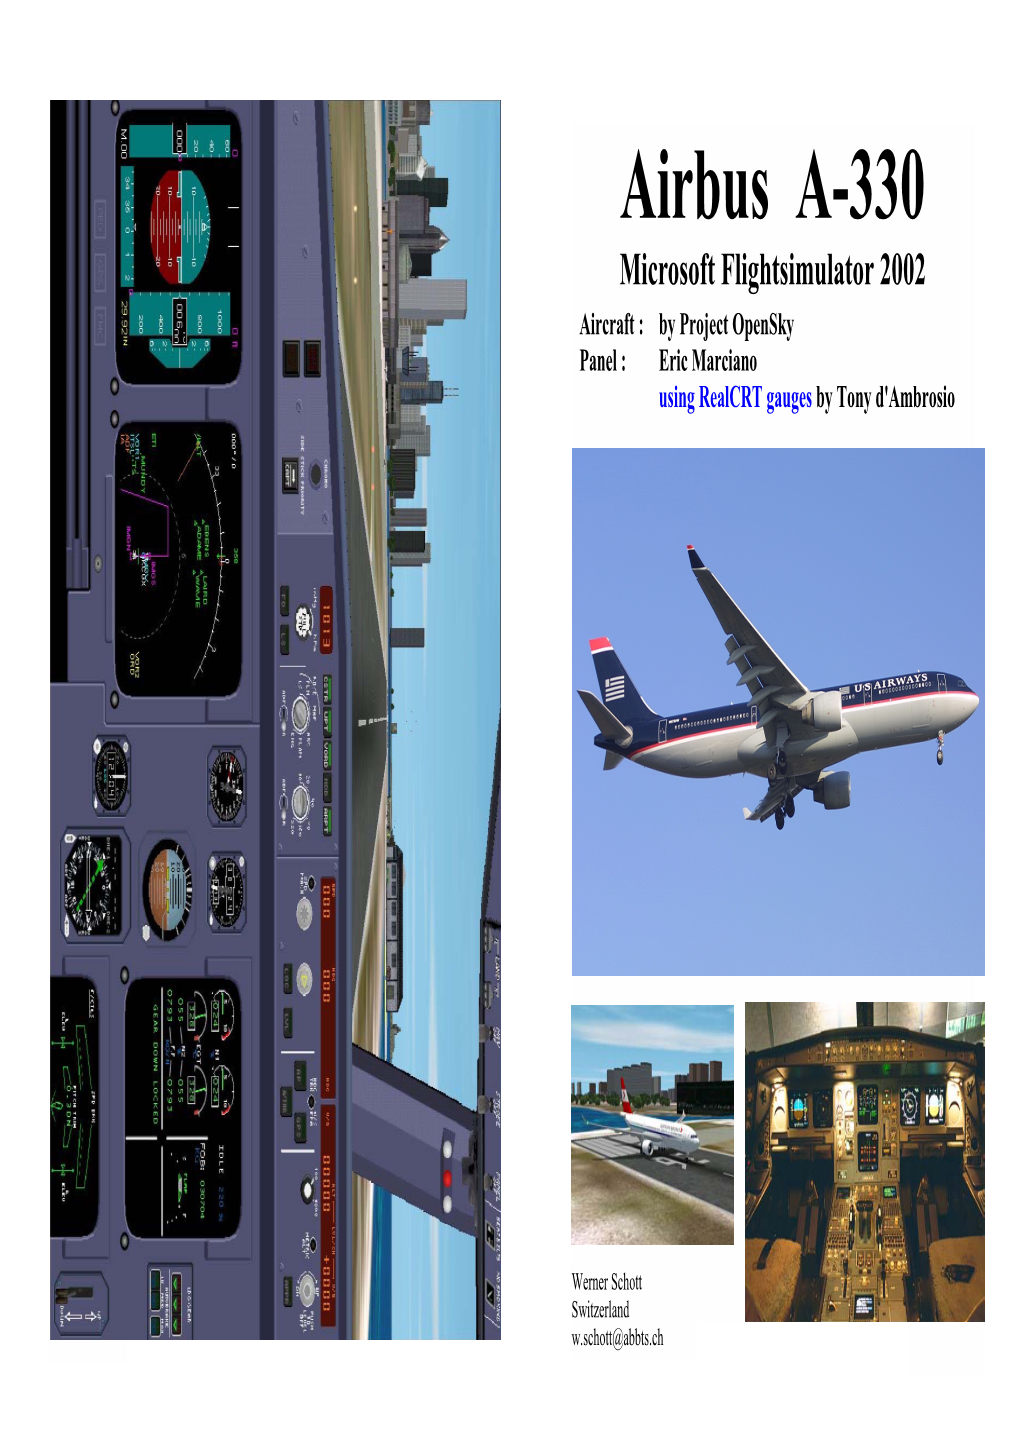 A-330 Microsoft Flightsimulator 2002